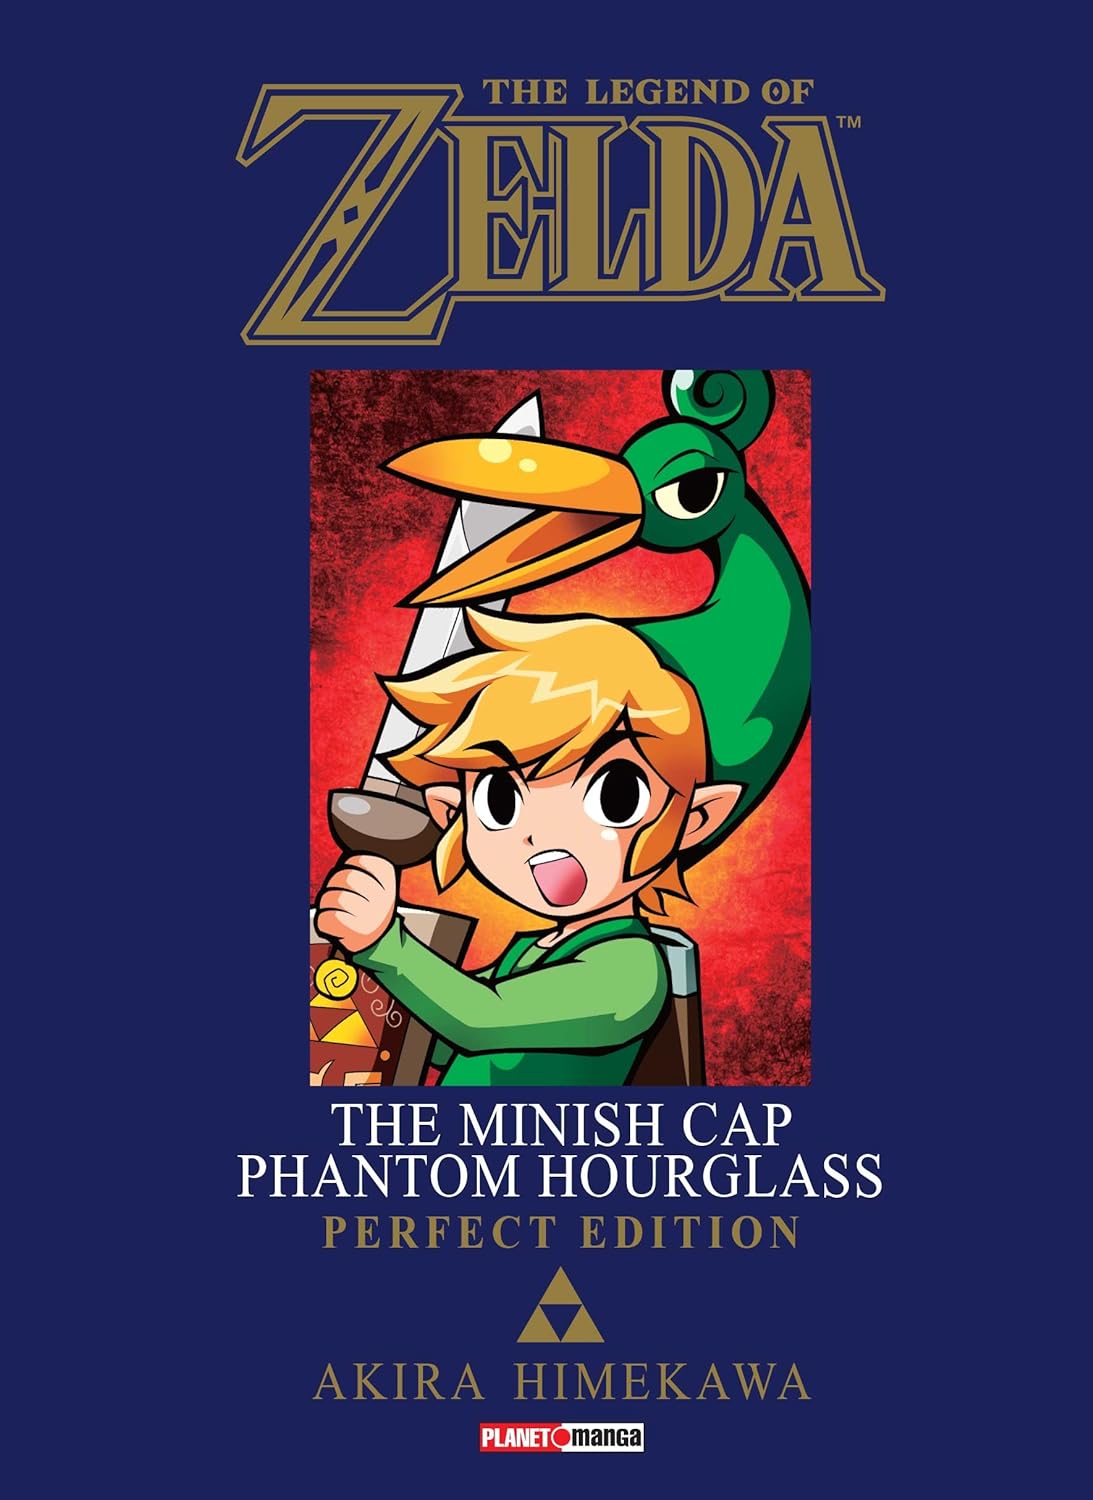 The Legend of Zelda - The Minish Cap cover 0